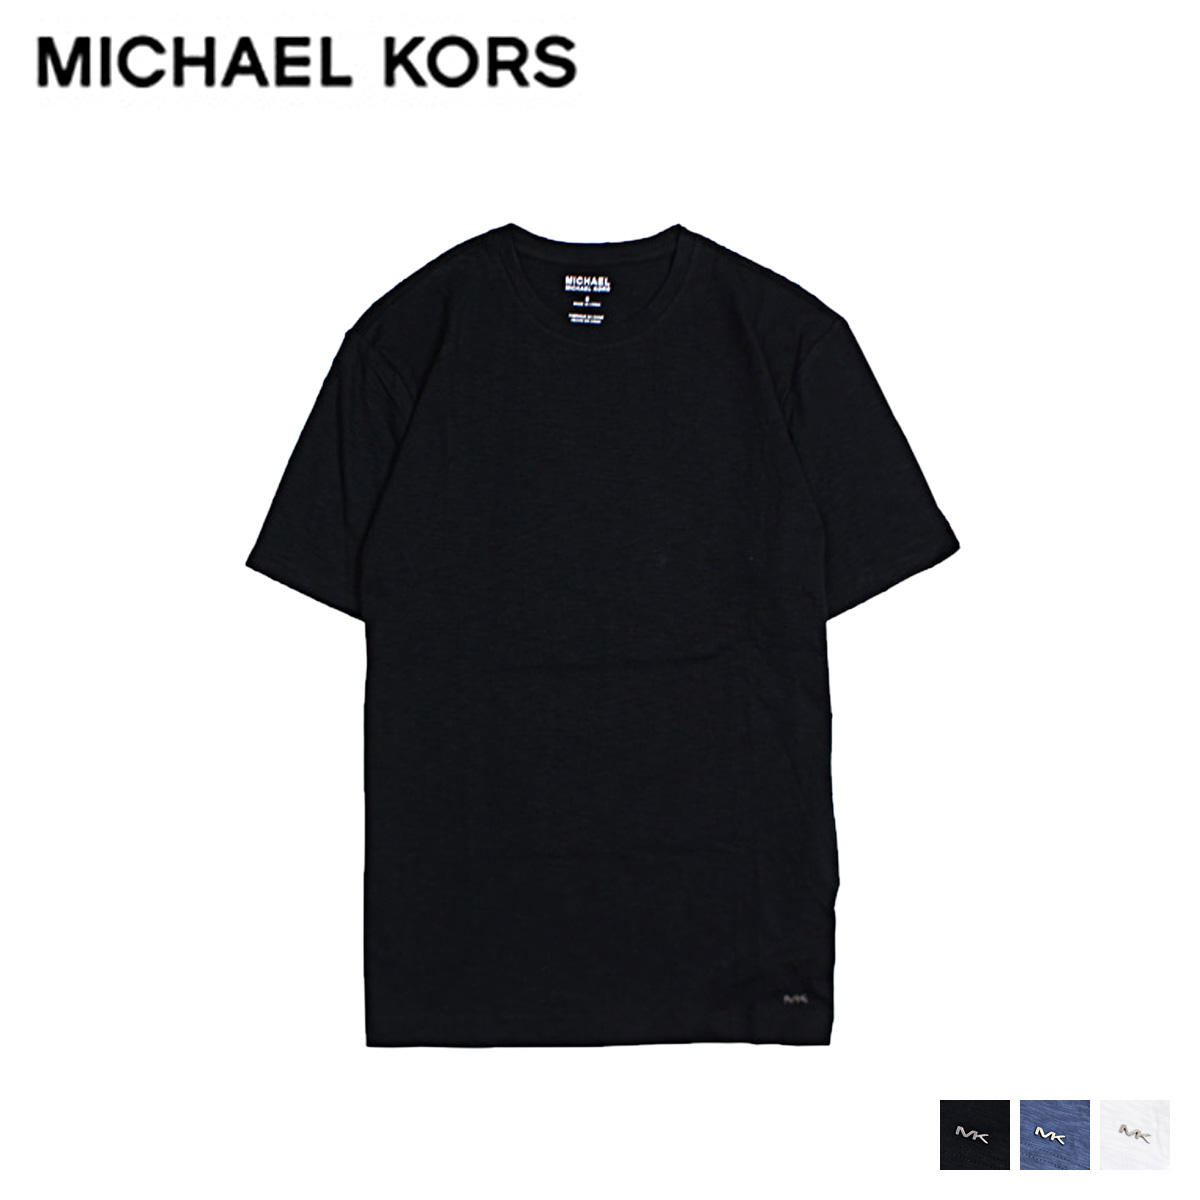 michael kors shirts womens for sale